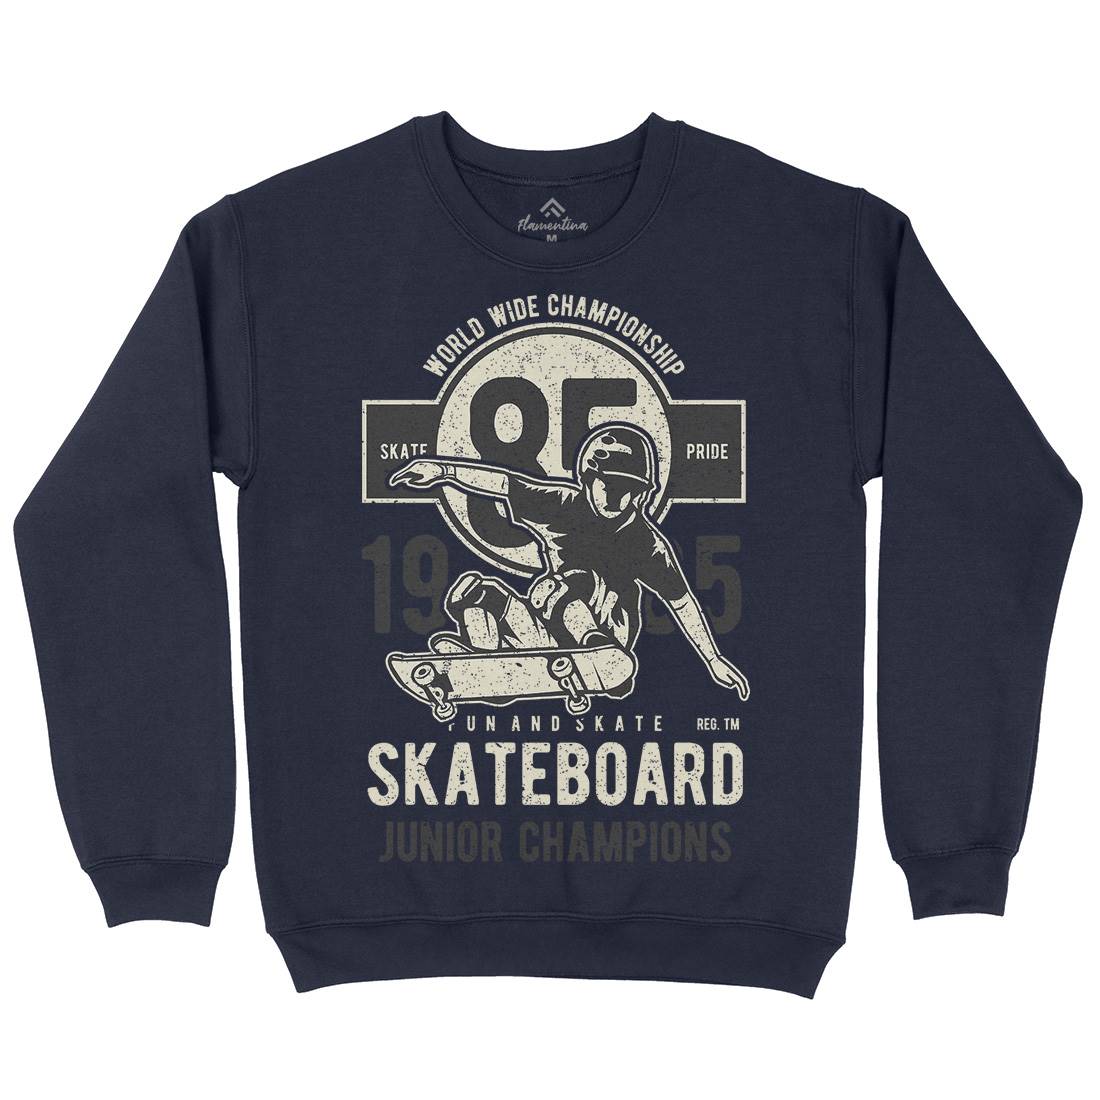 Skateboard Junior Champions Mens Crew Neck Sweatshirt Skate A755